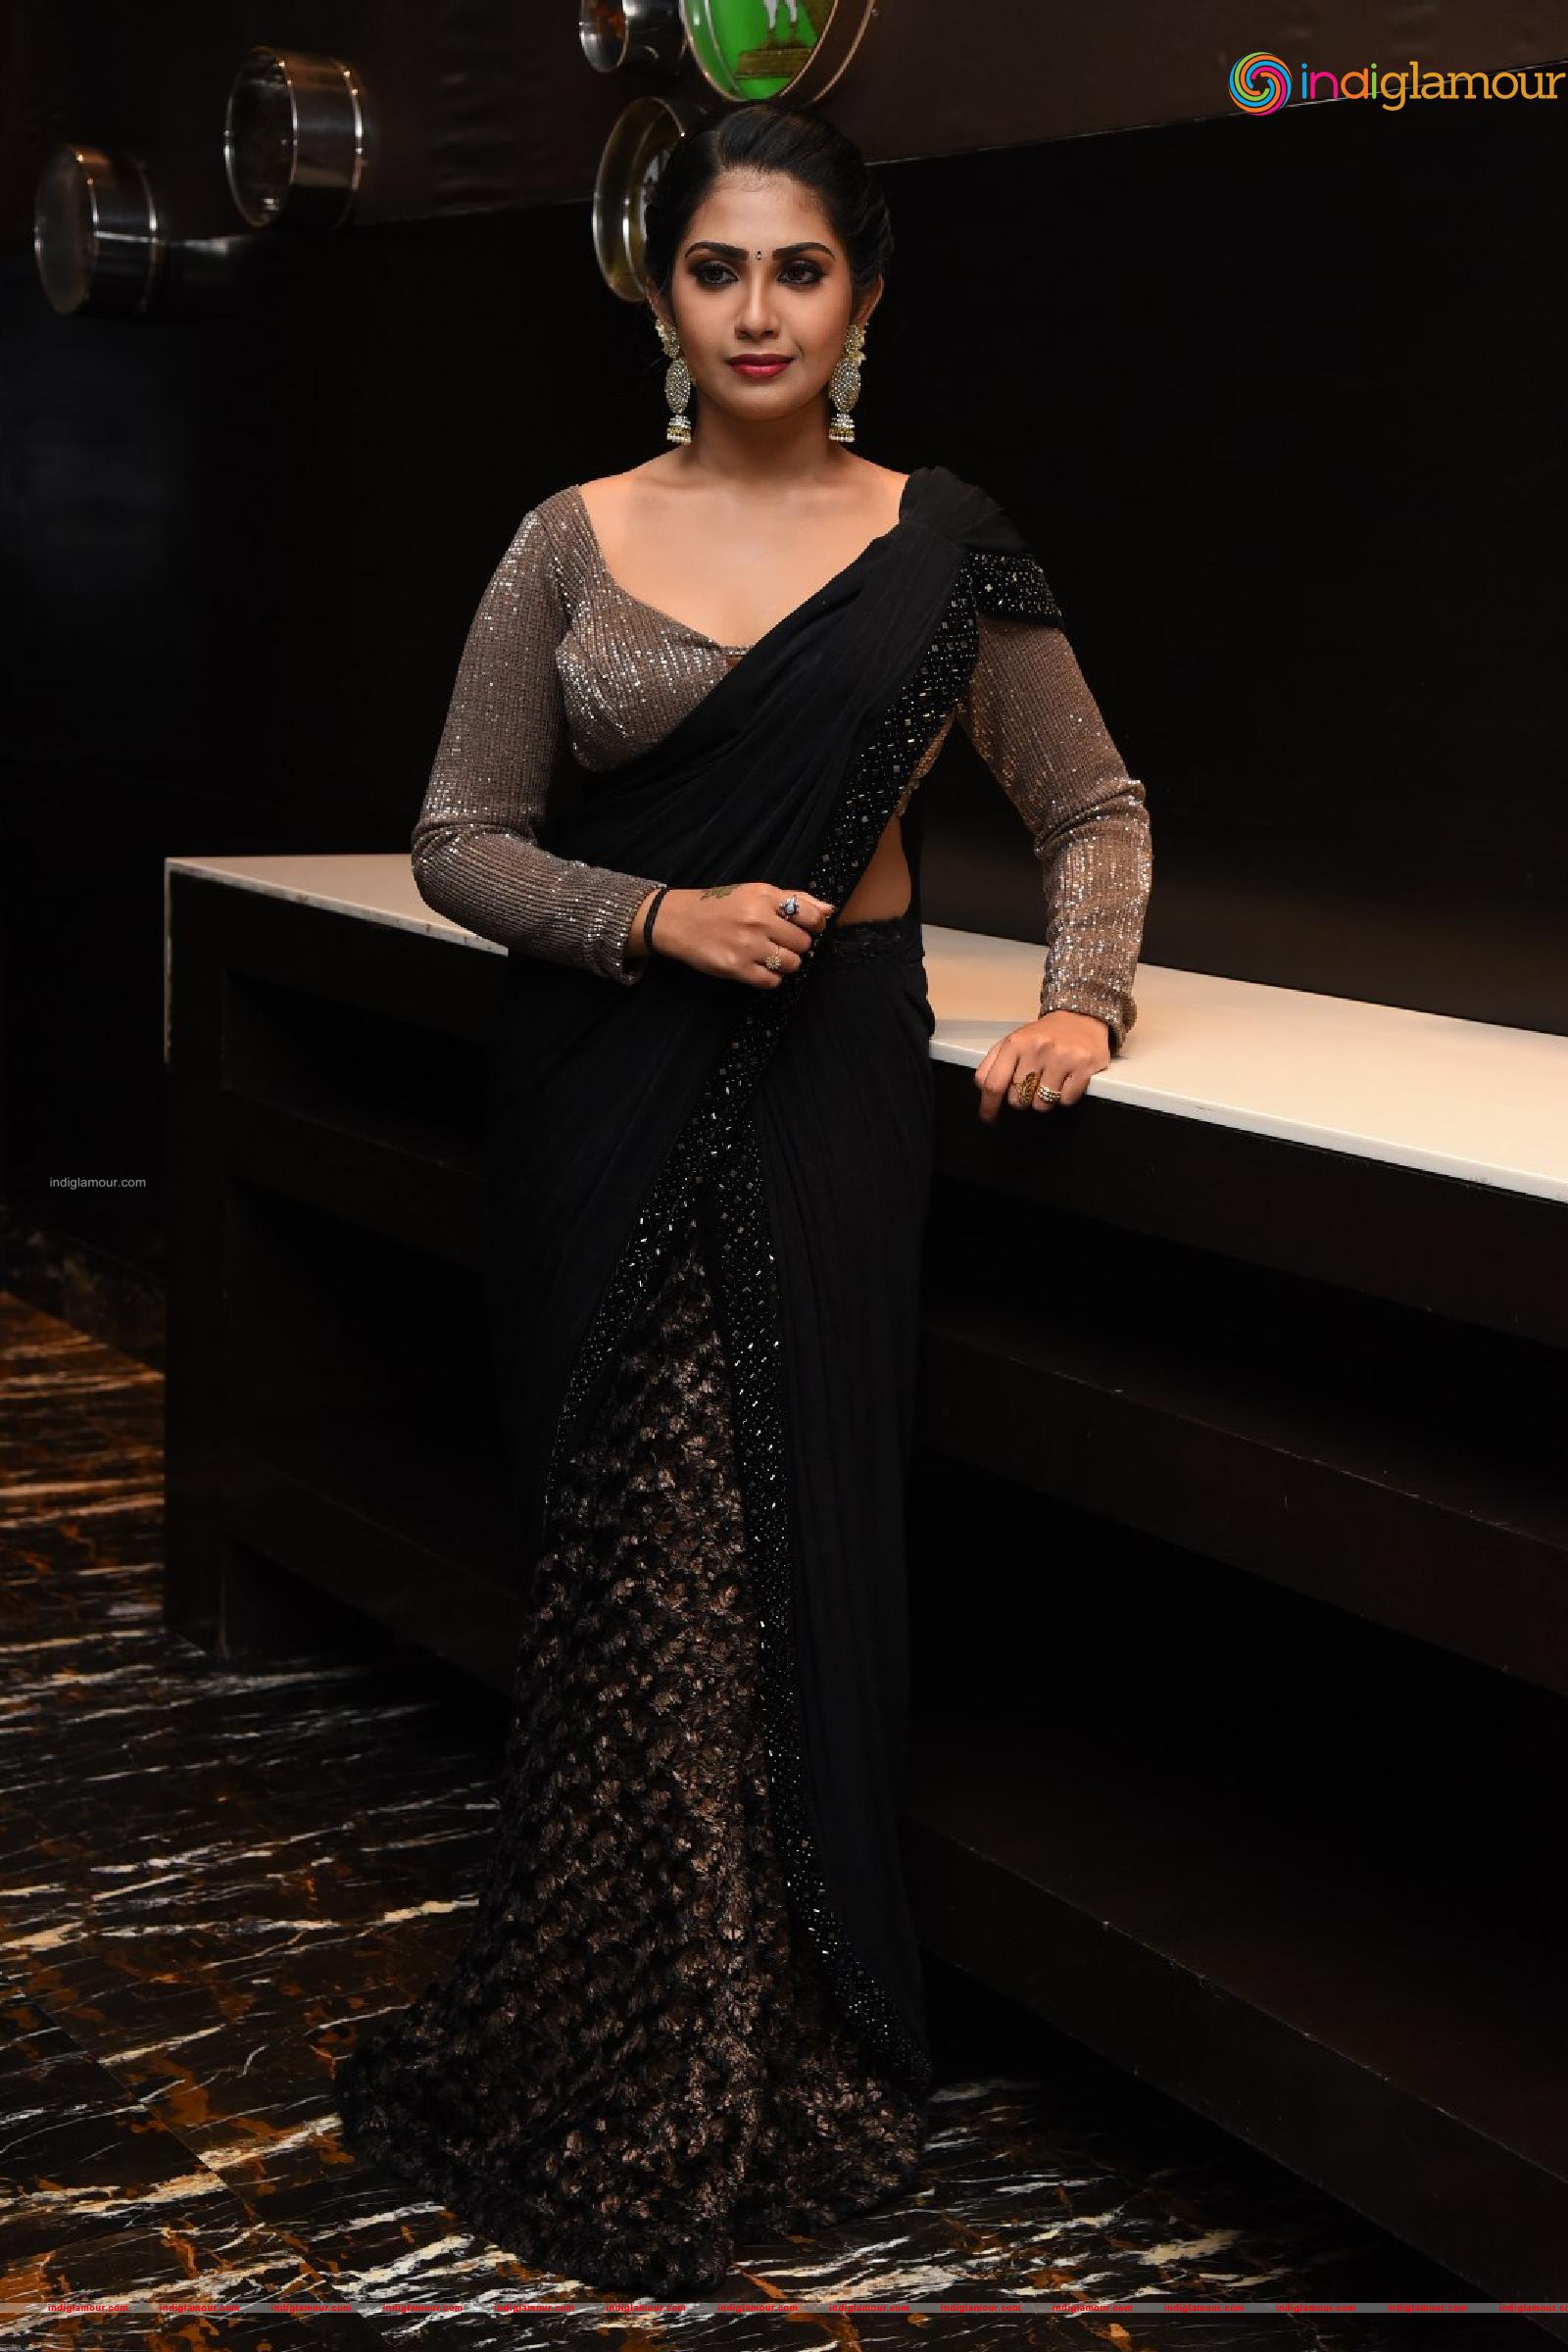 Varsha Viswanath Actress photo,image,pics and stills - # 538812